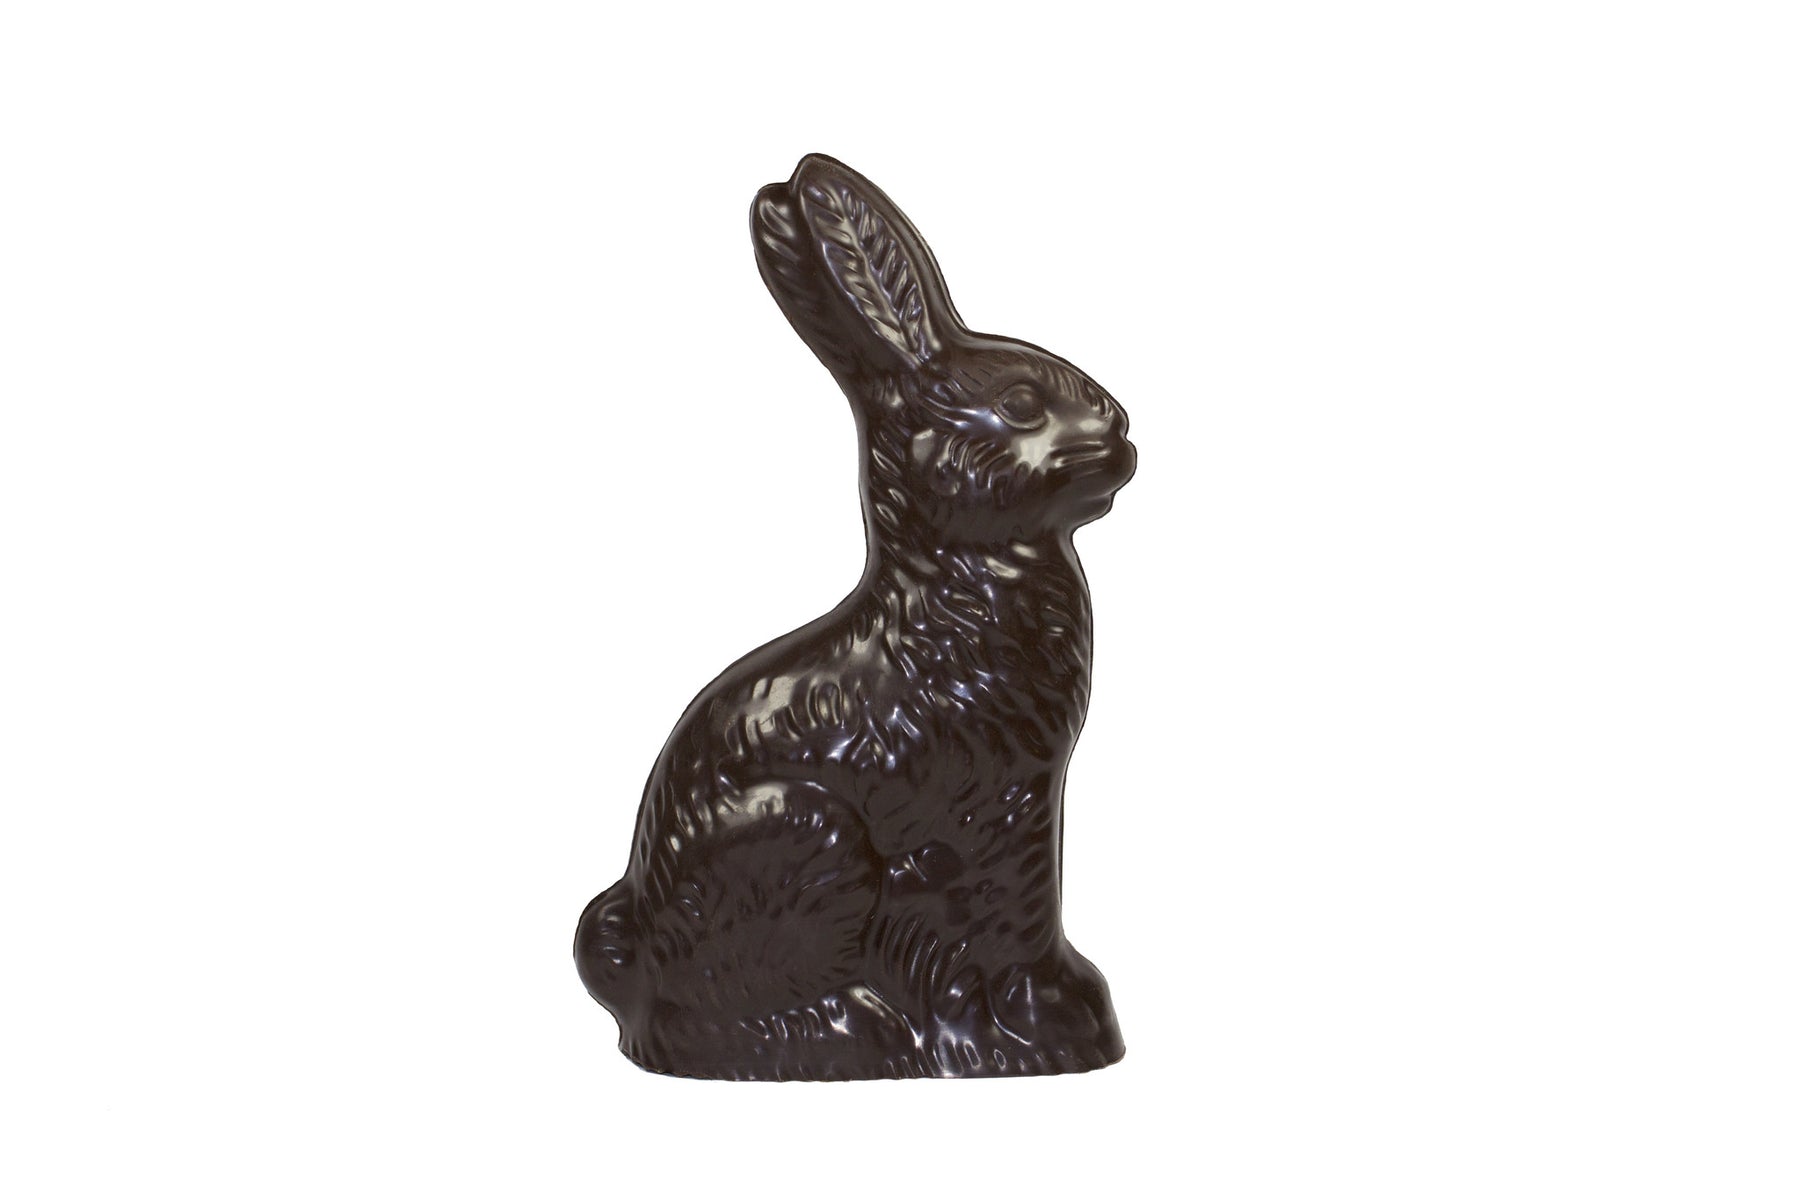 Dark Chocolate Rabbit - Rosalind Candy Castle